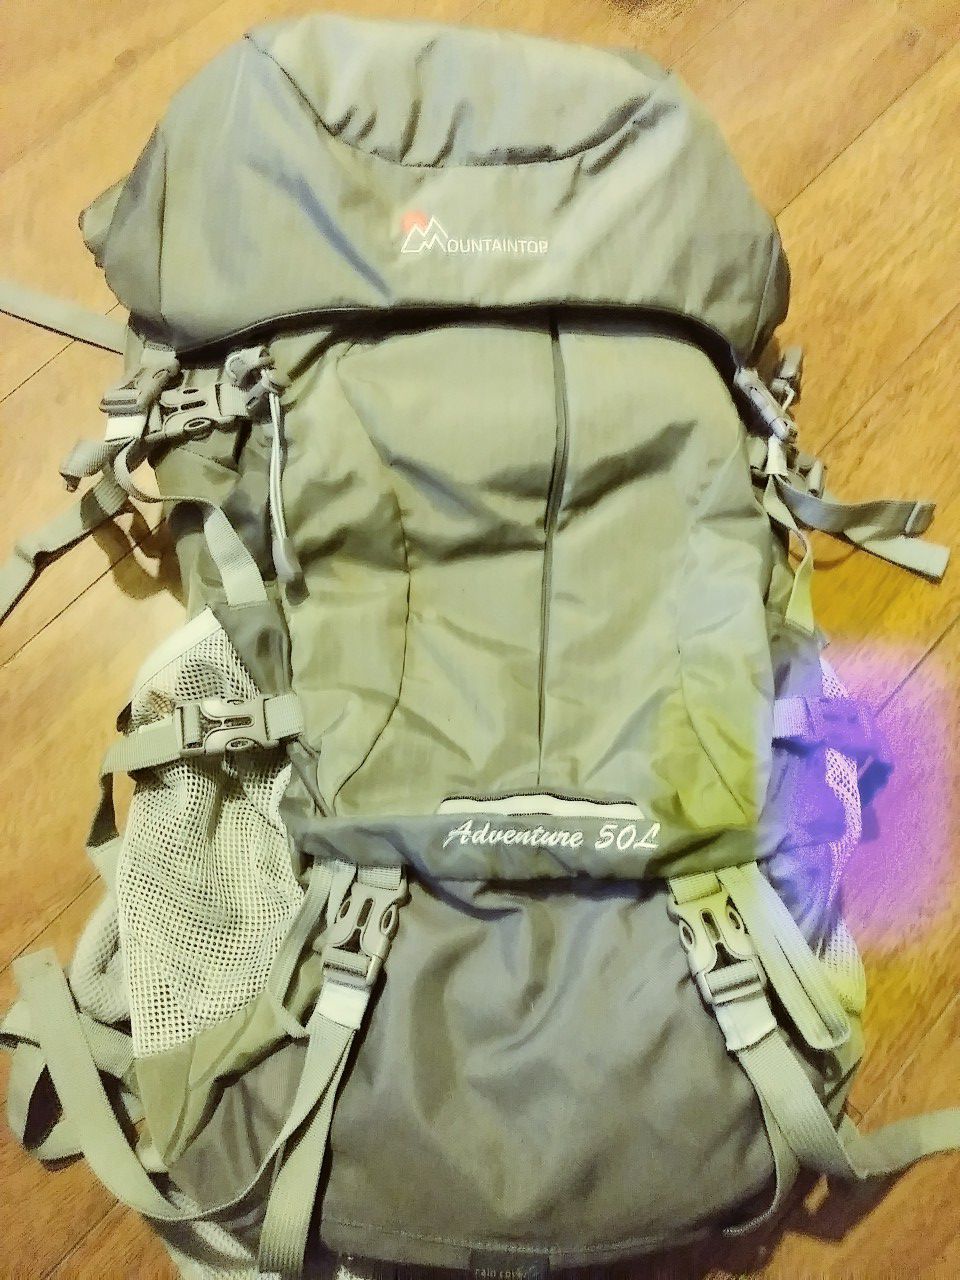 Mountaintop Adventure Backpack like new...$20